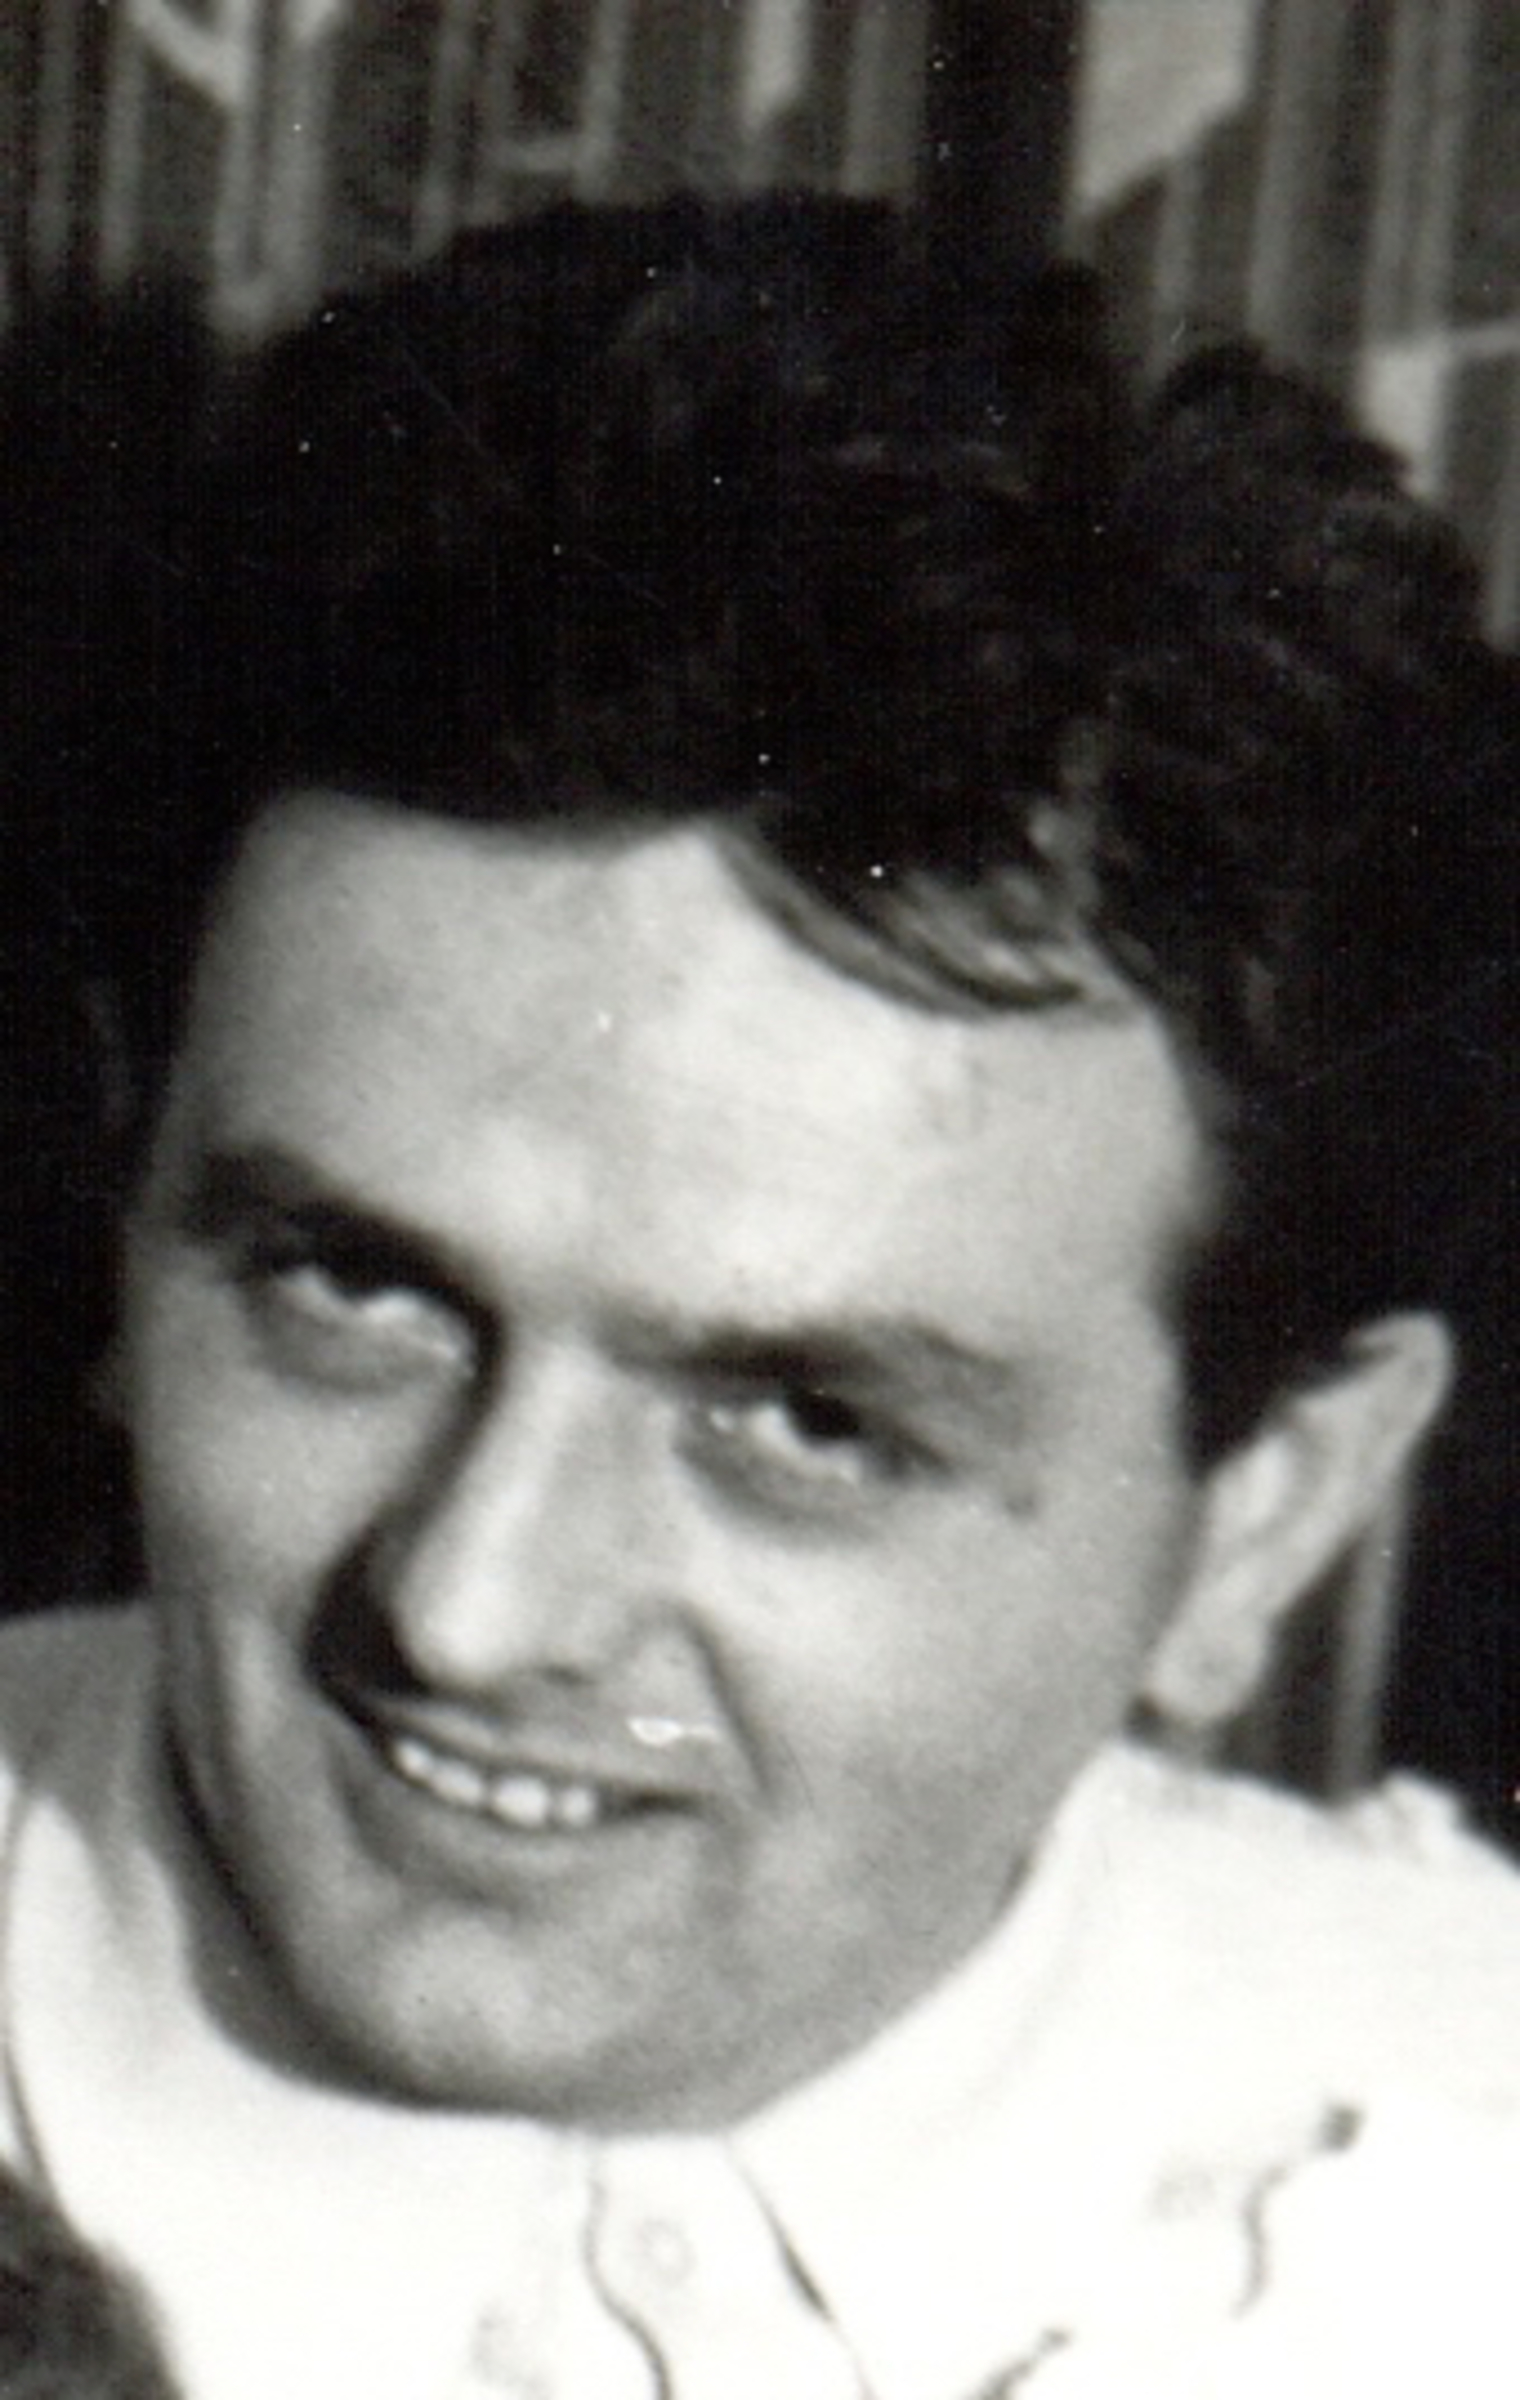 Profile photo, early 70-ties